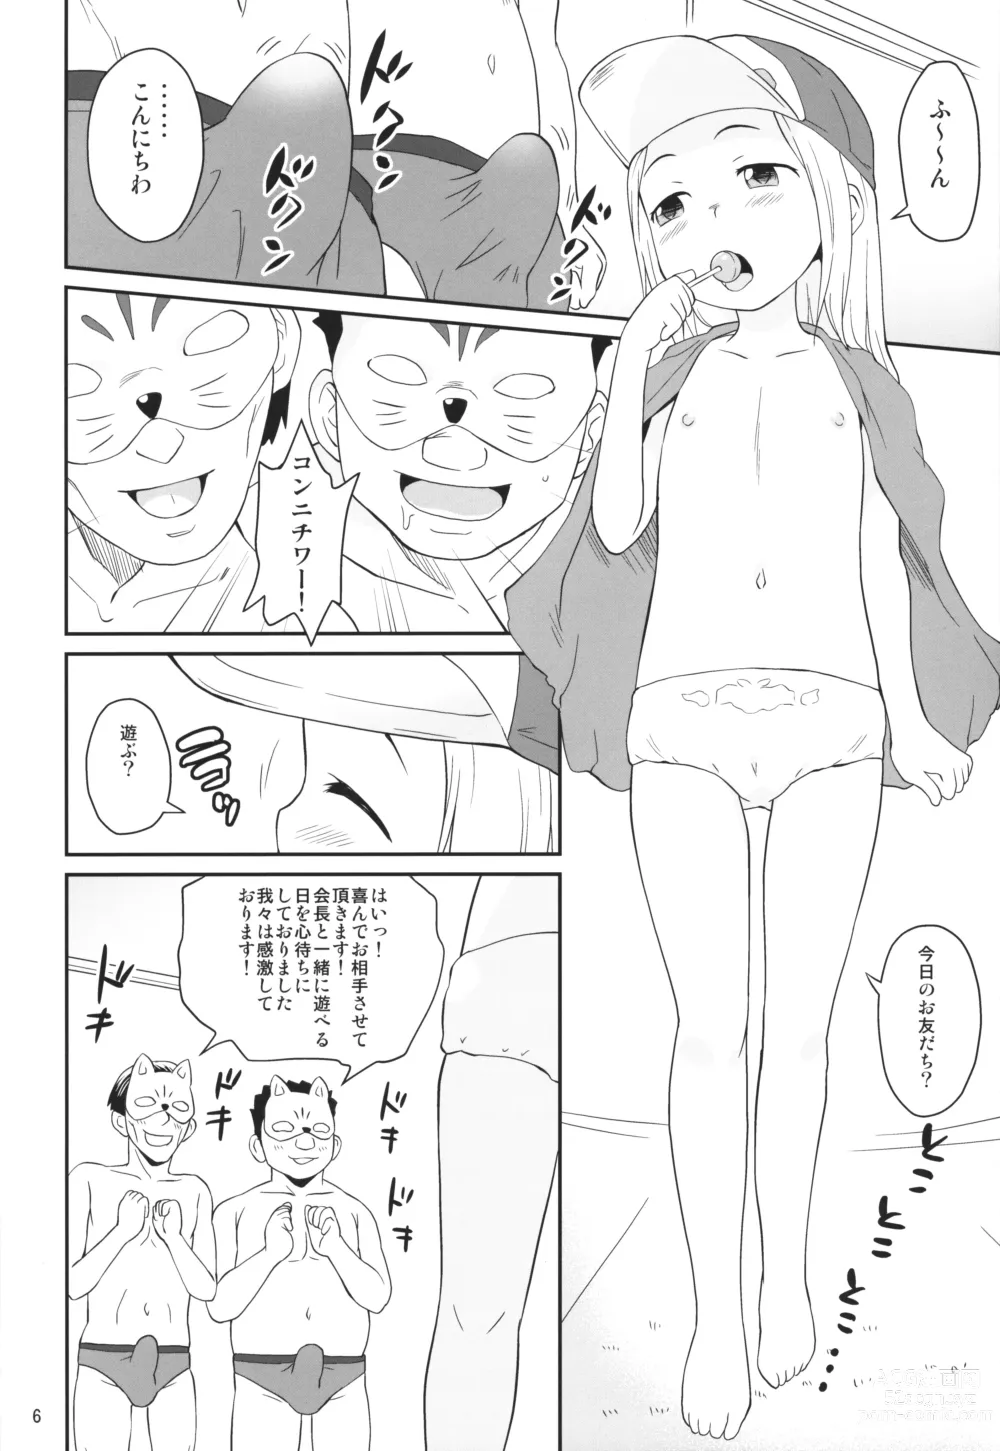 Page 5 of doujinshi Otomodachi Kai